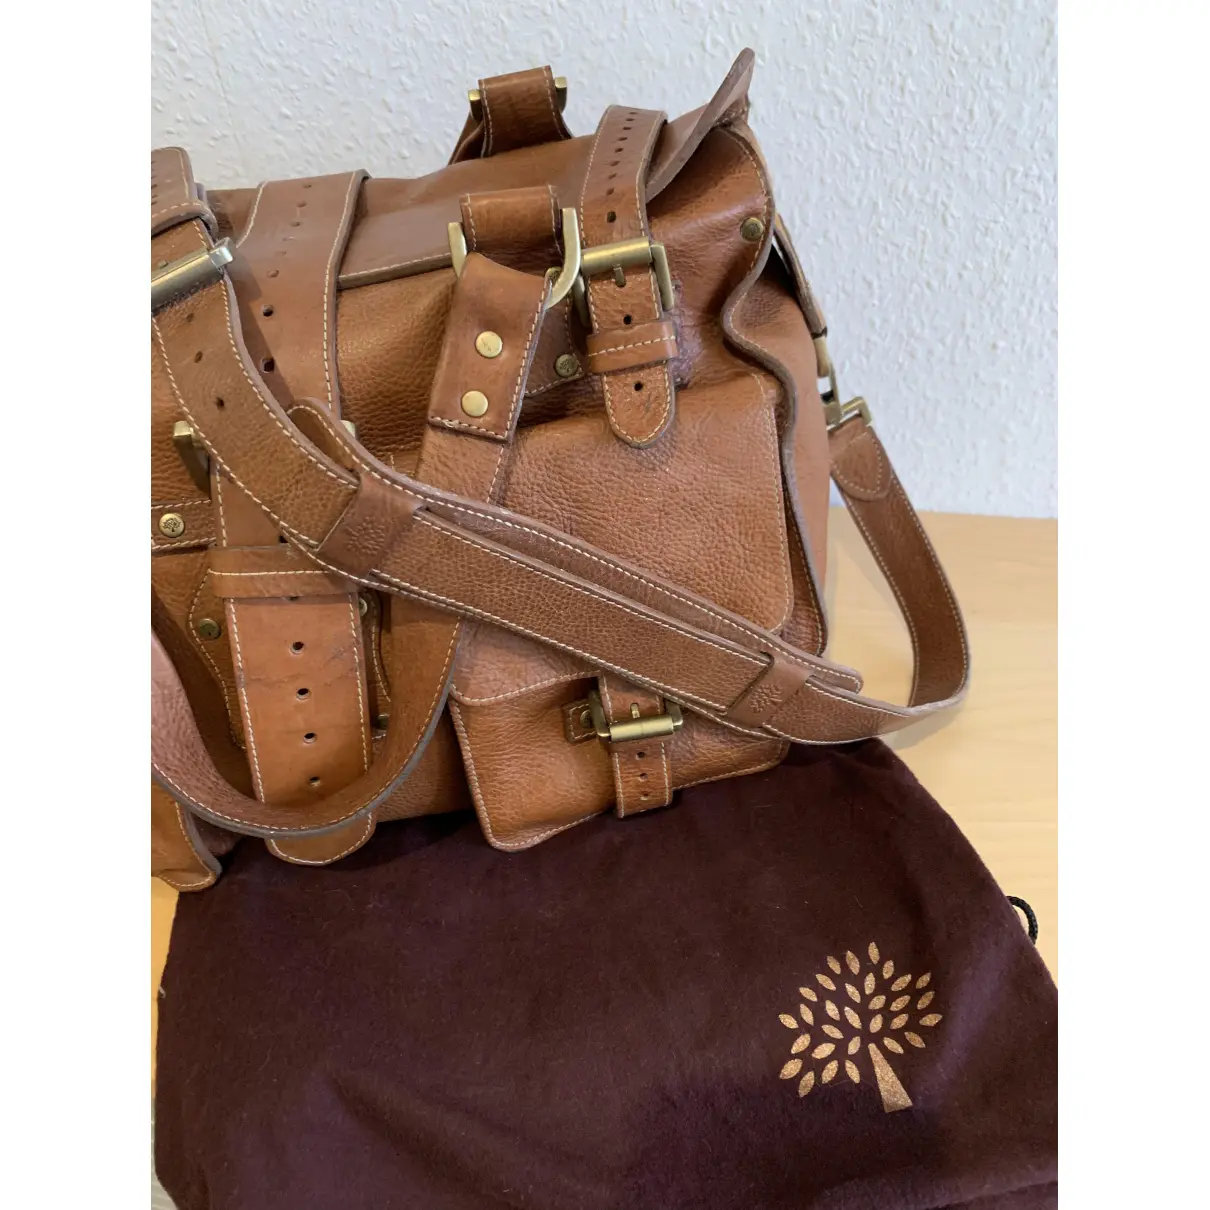 Buy Mulberry Leather 48h bag online - Vintage